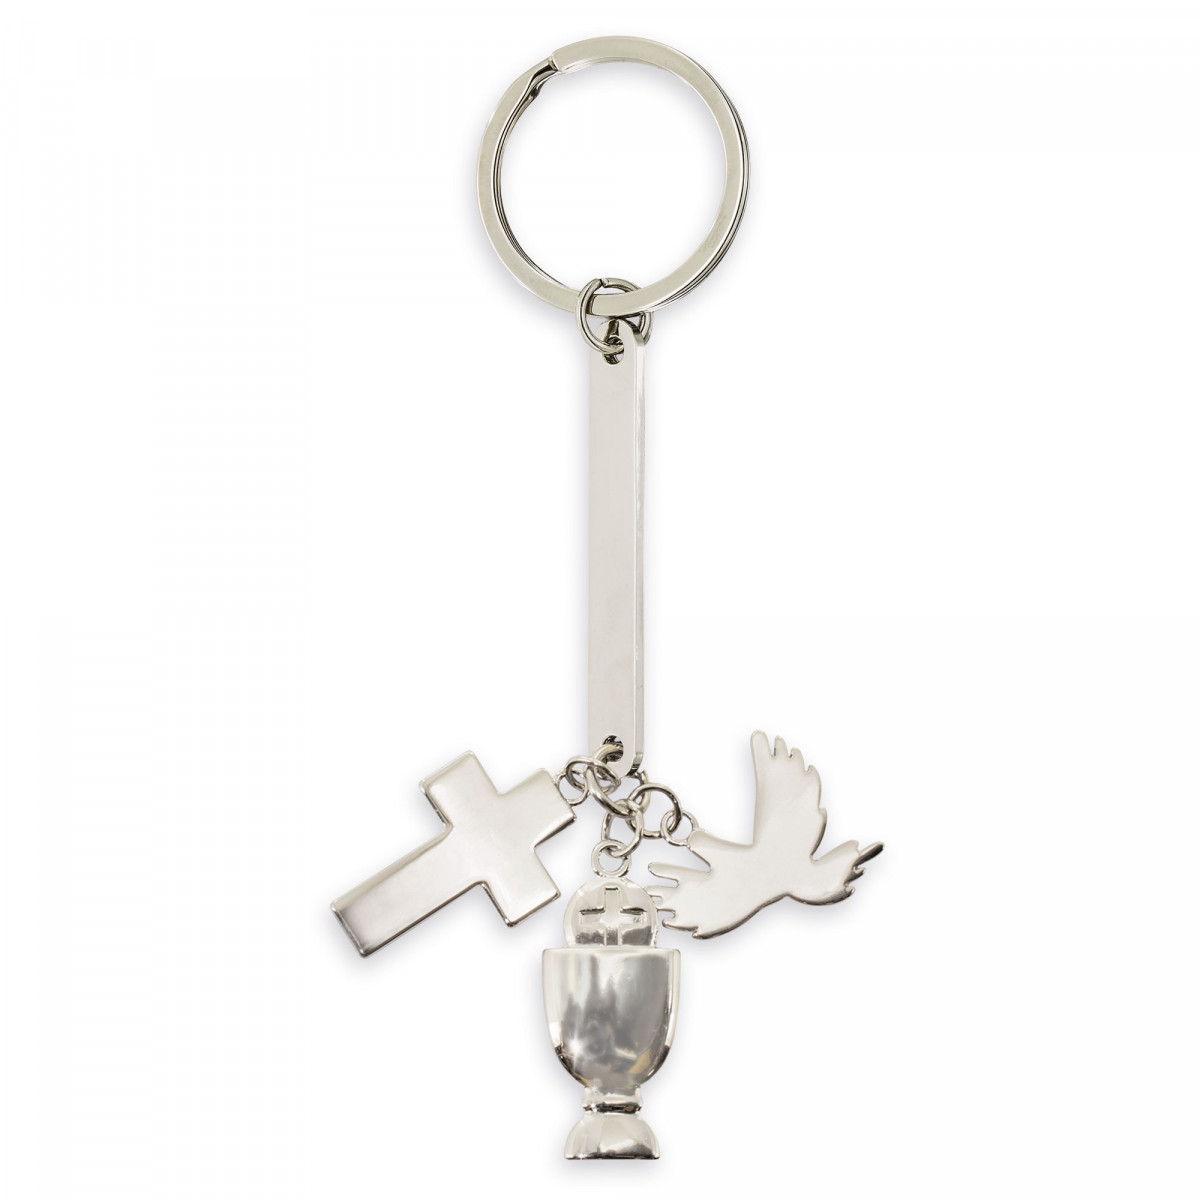 Porte clés de communion original